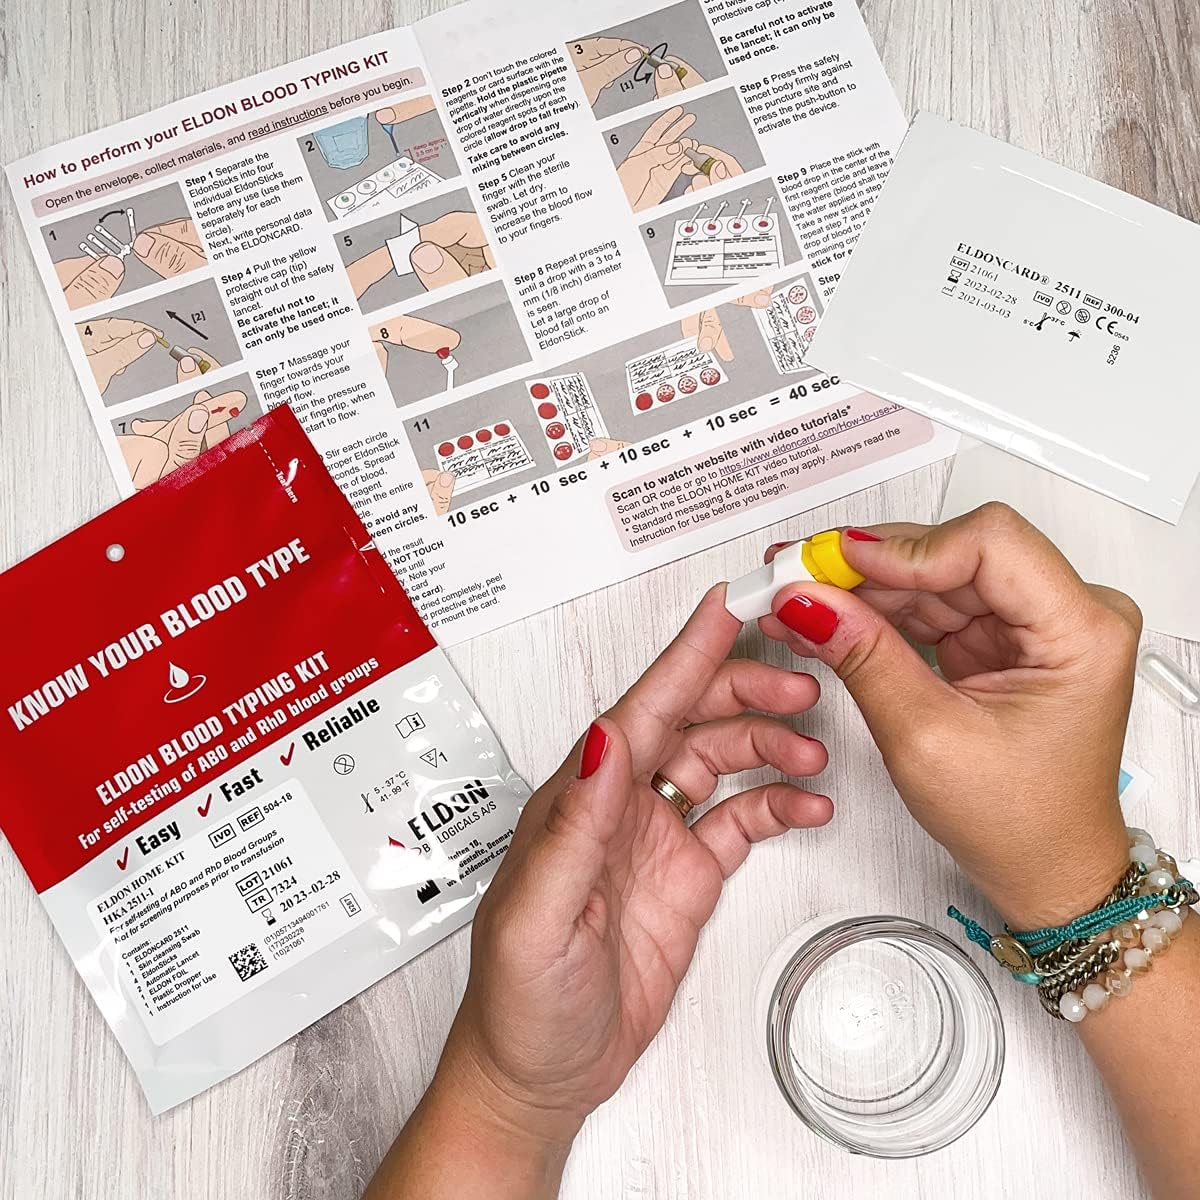 Original Home Blood Typing Kit - New Package + Improved Lancet (10 Kits)